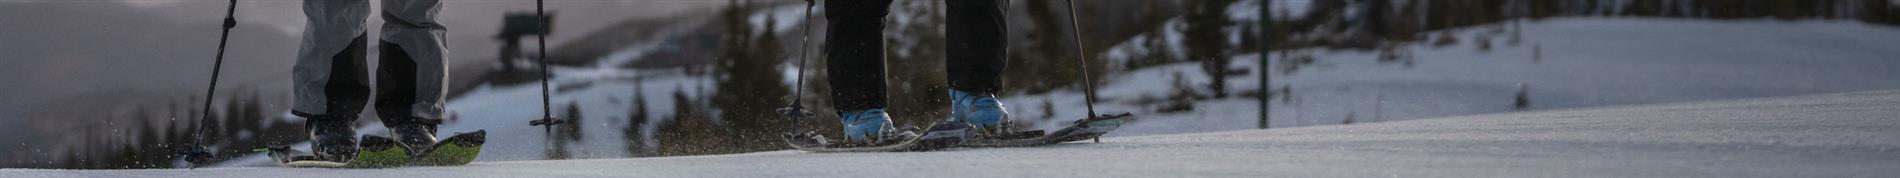 Men's Cross Country Skiing Equipment 